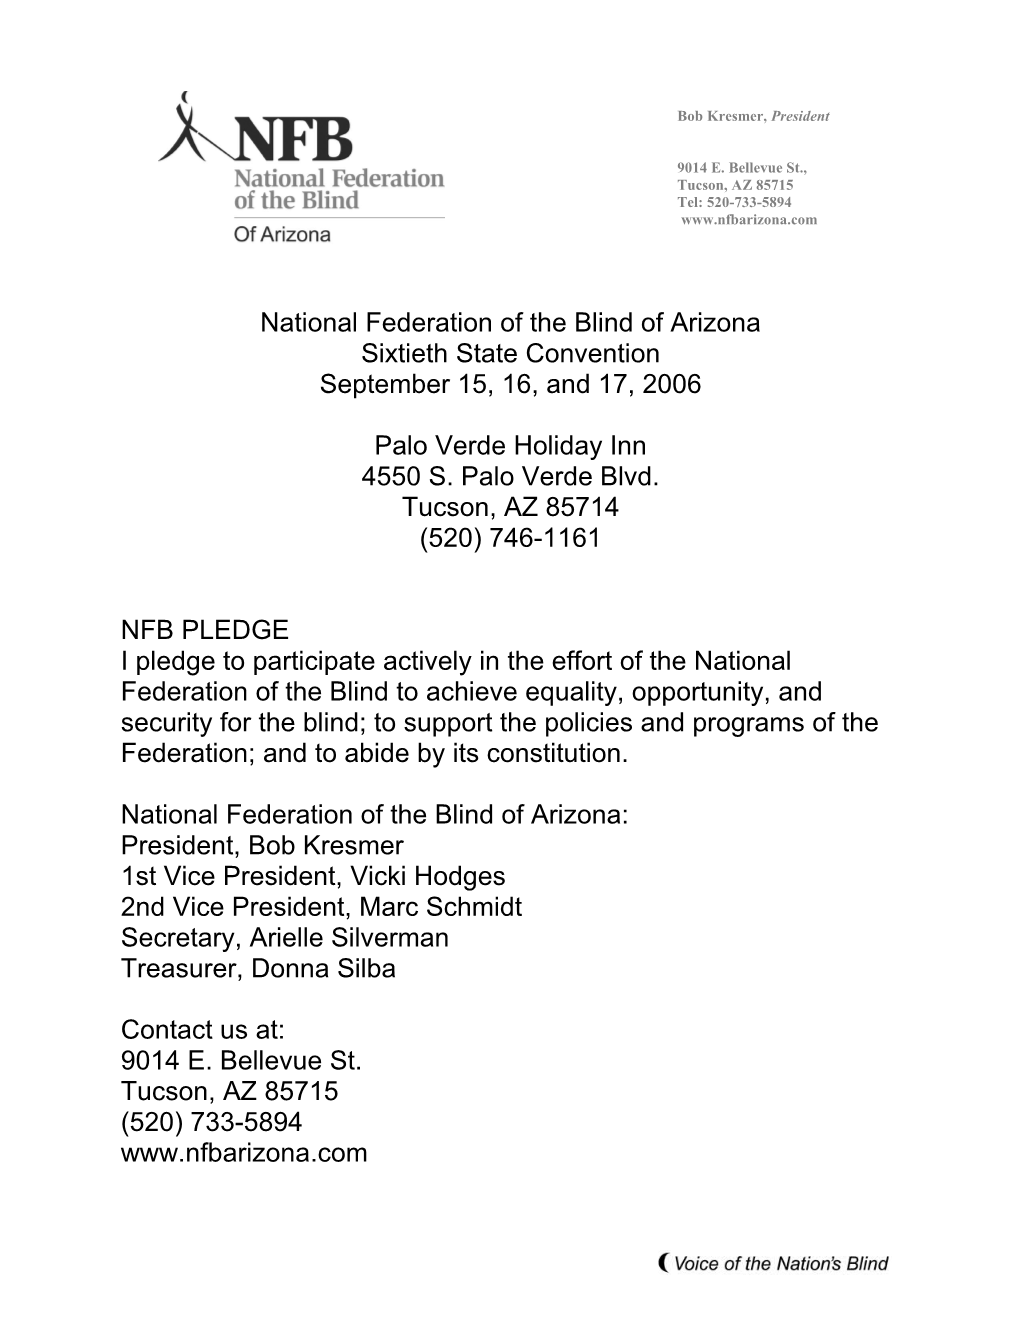 National Federation of the Blind of Arizona